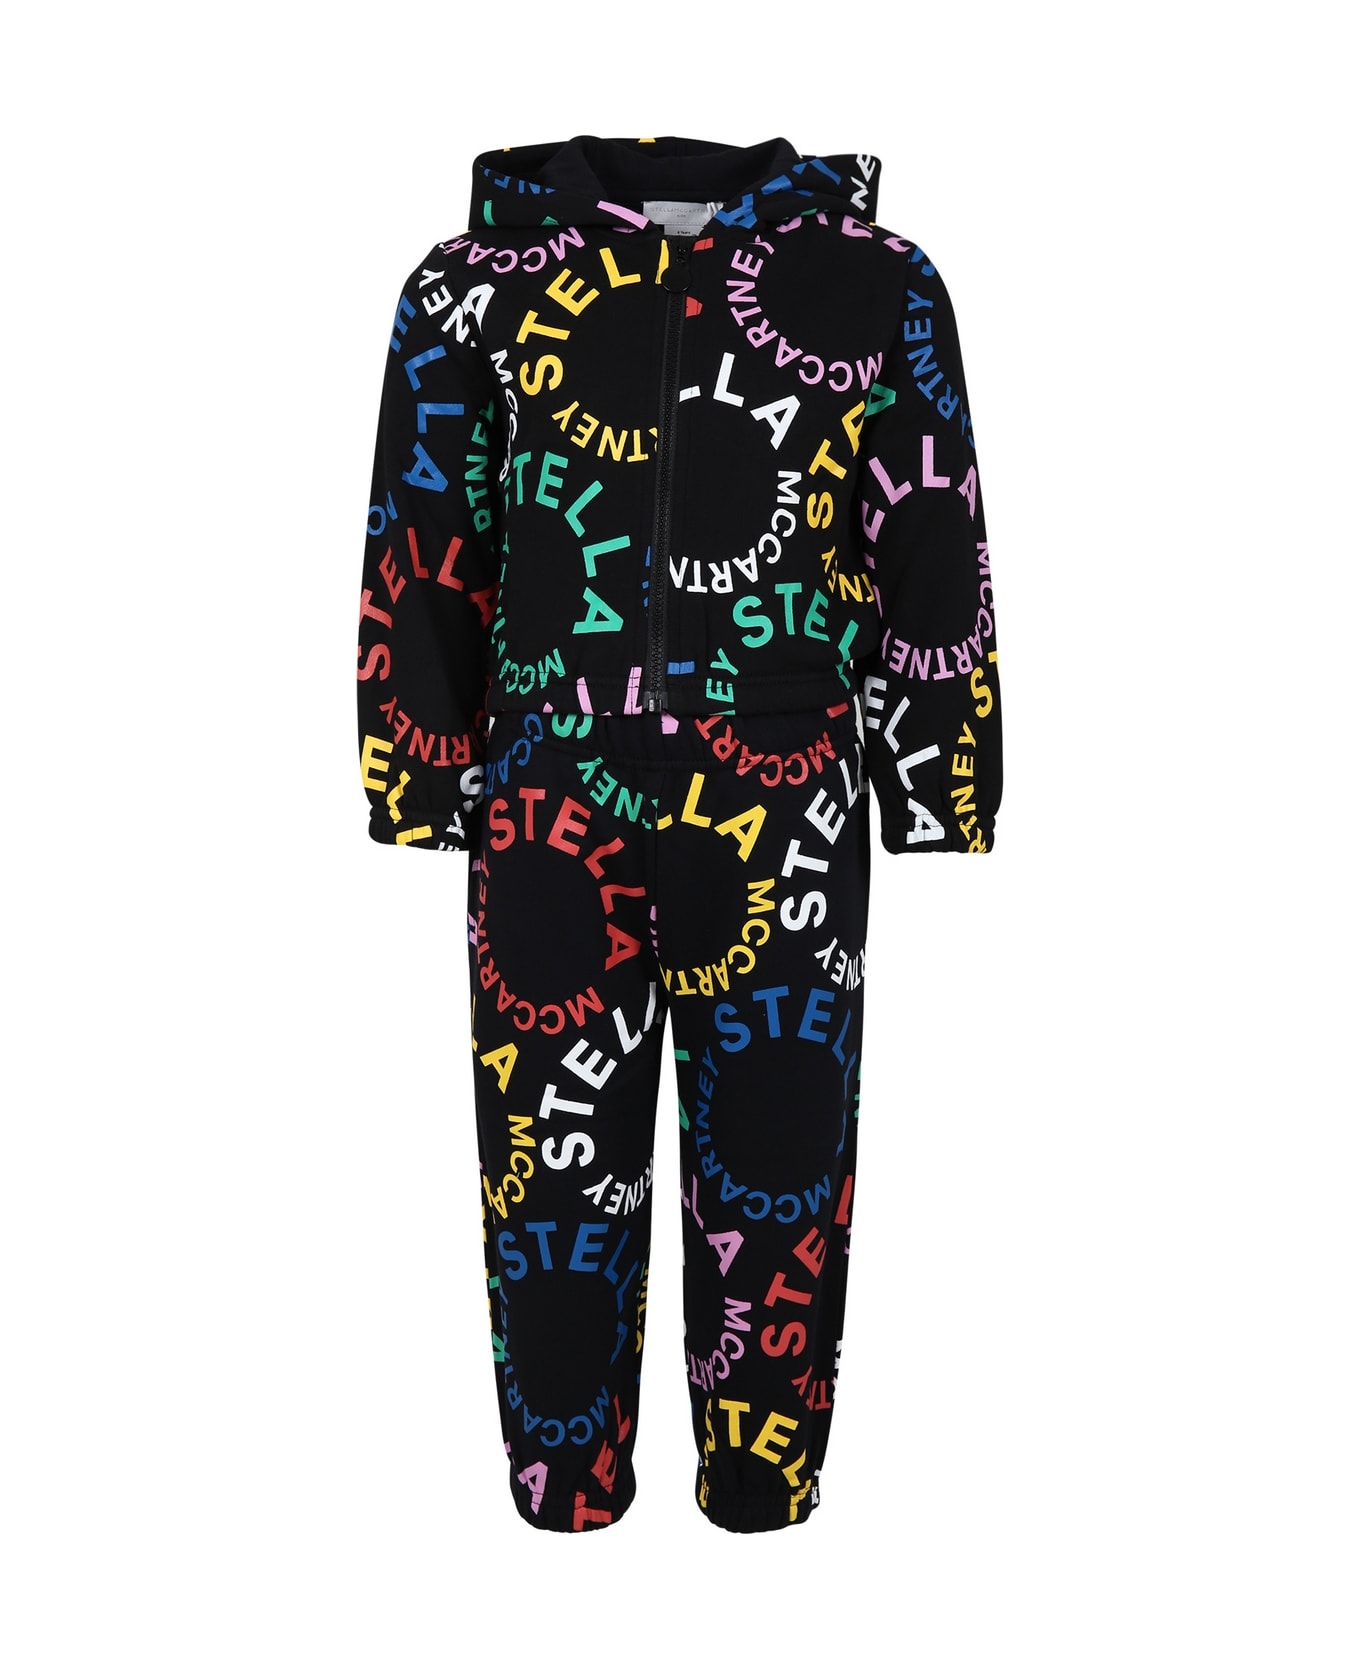 Stella McCartney Kids Black Sports Suit For Girl With Multicolor Logo - Black